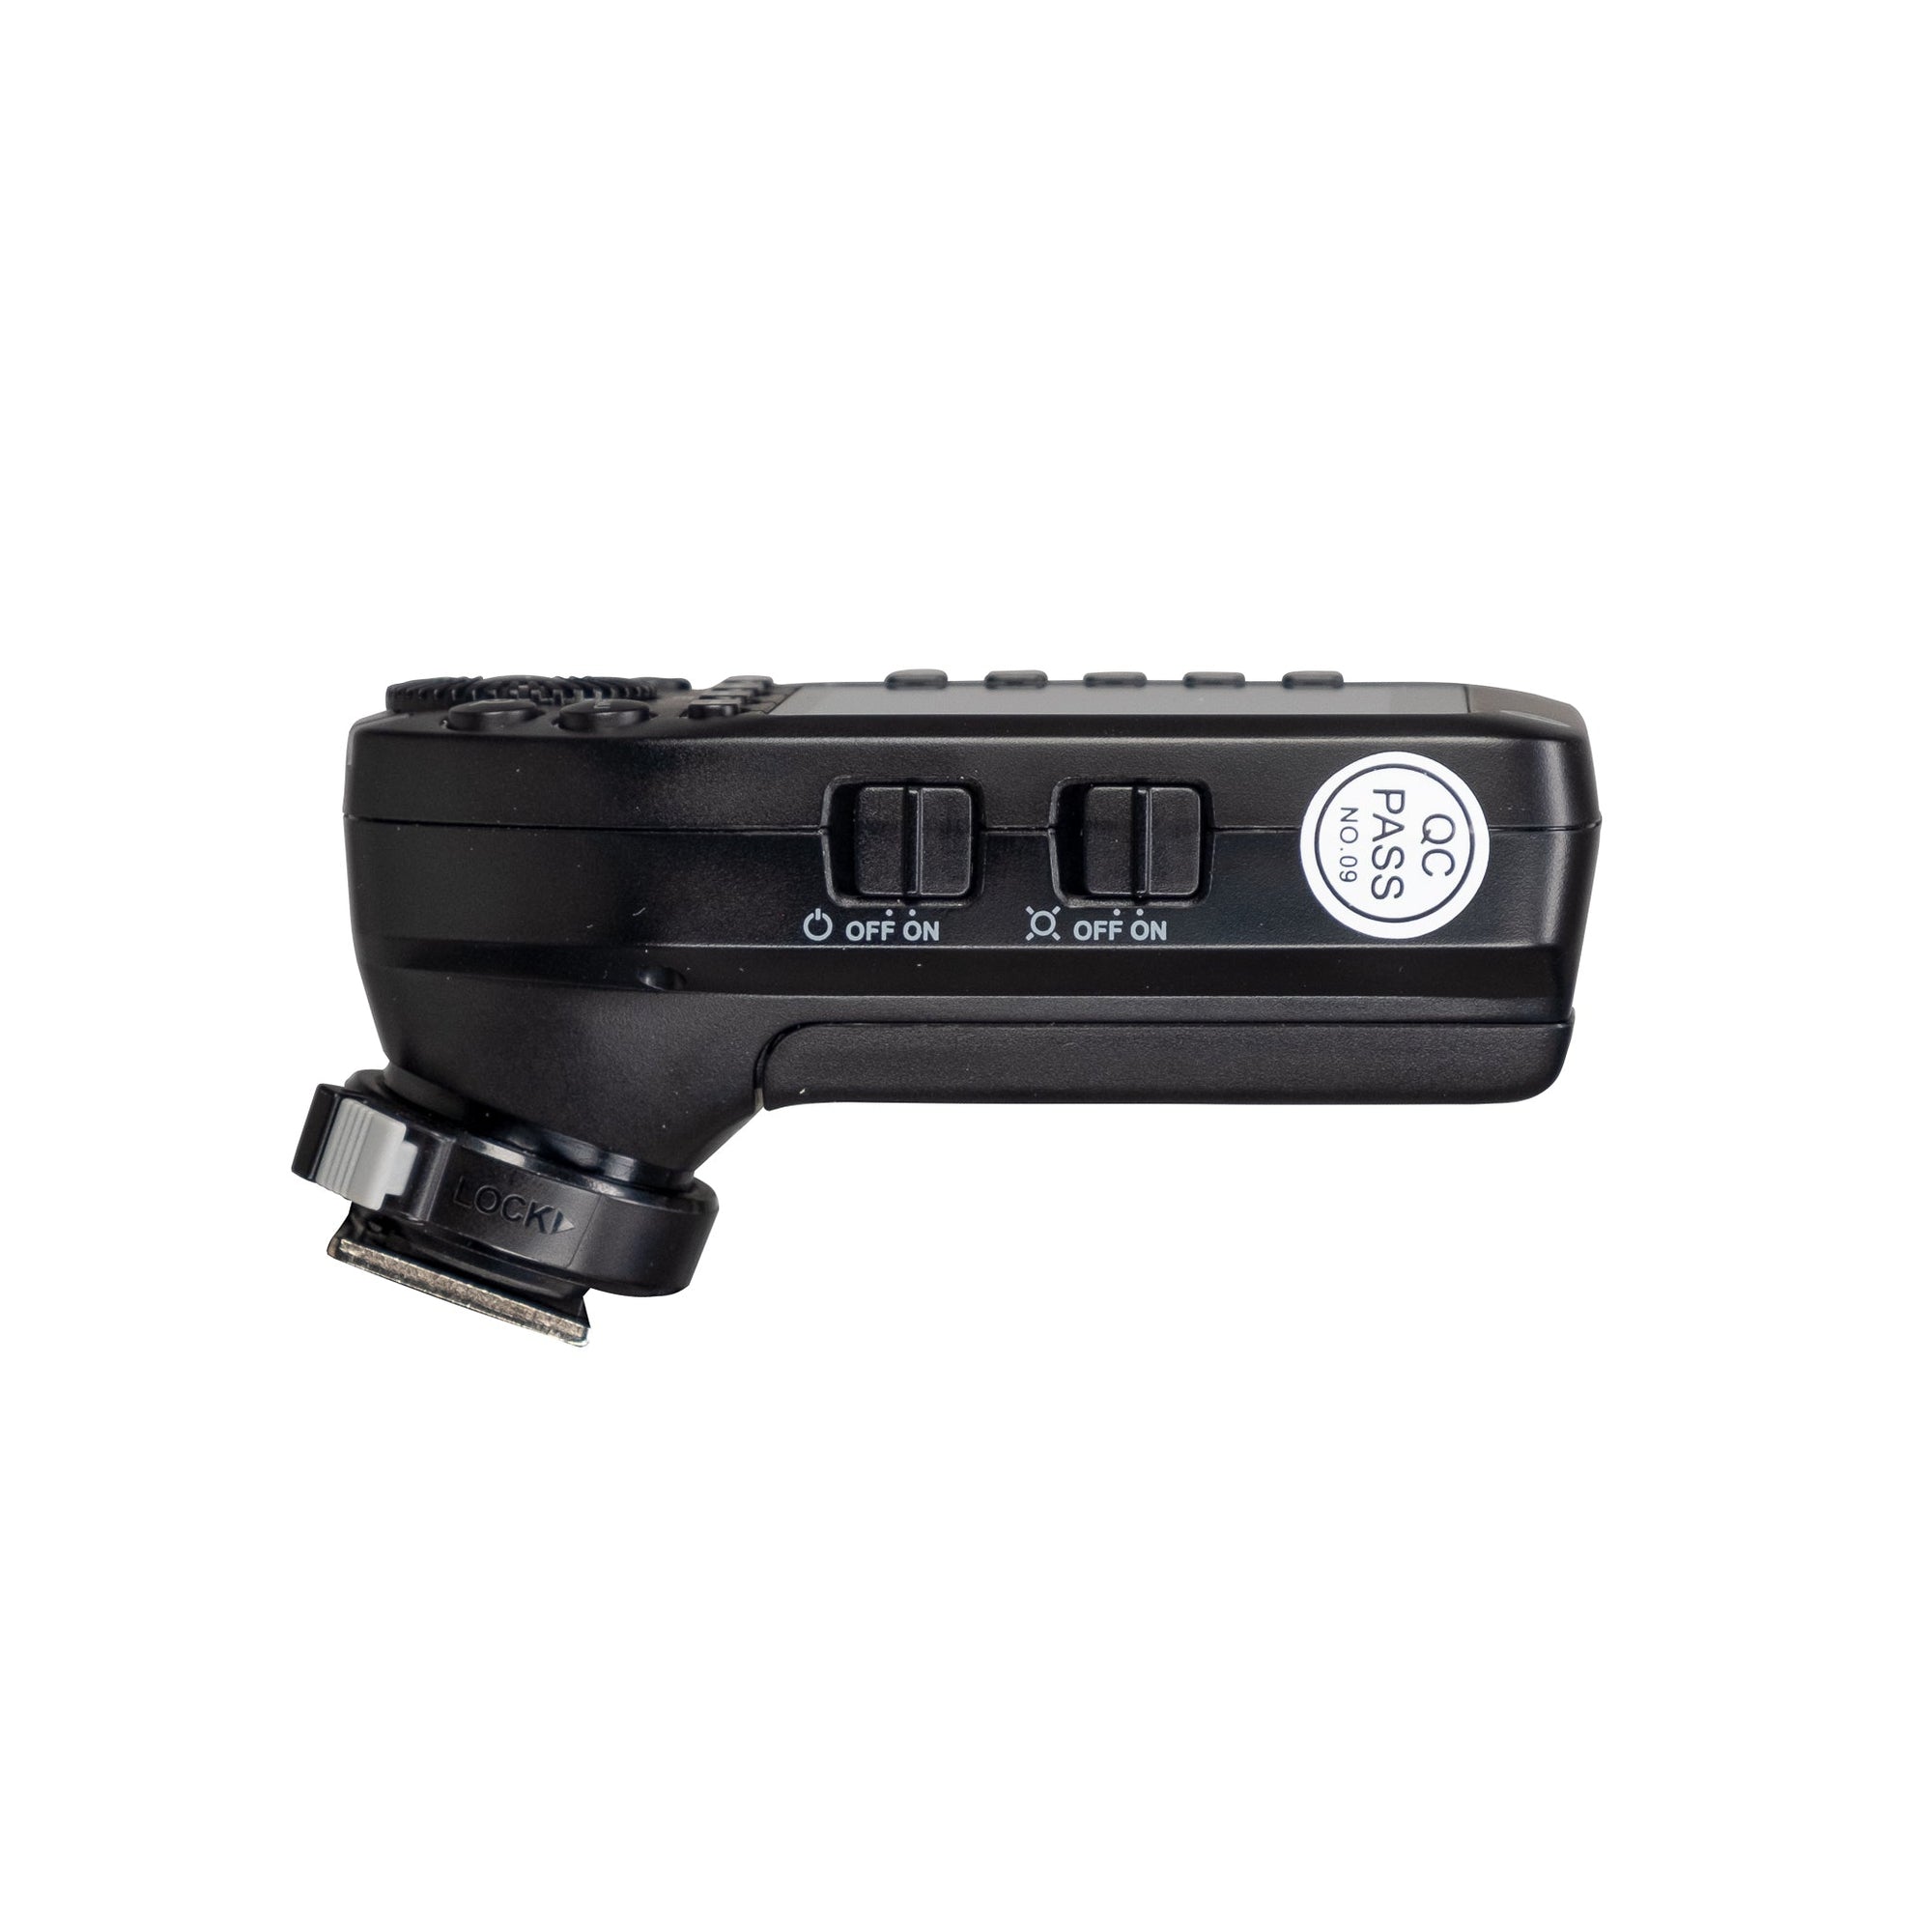 Godox XPROII-N Radio Trigger Controller - Nikon - Strobepro Studio 